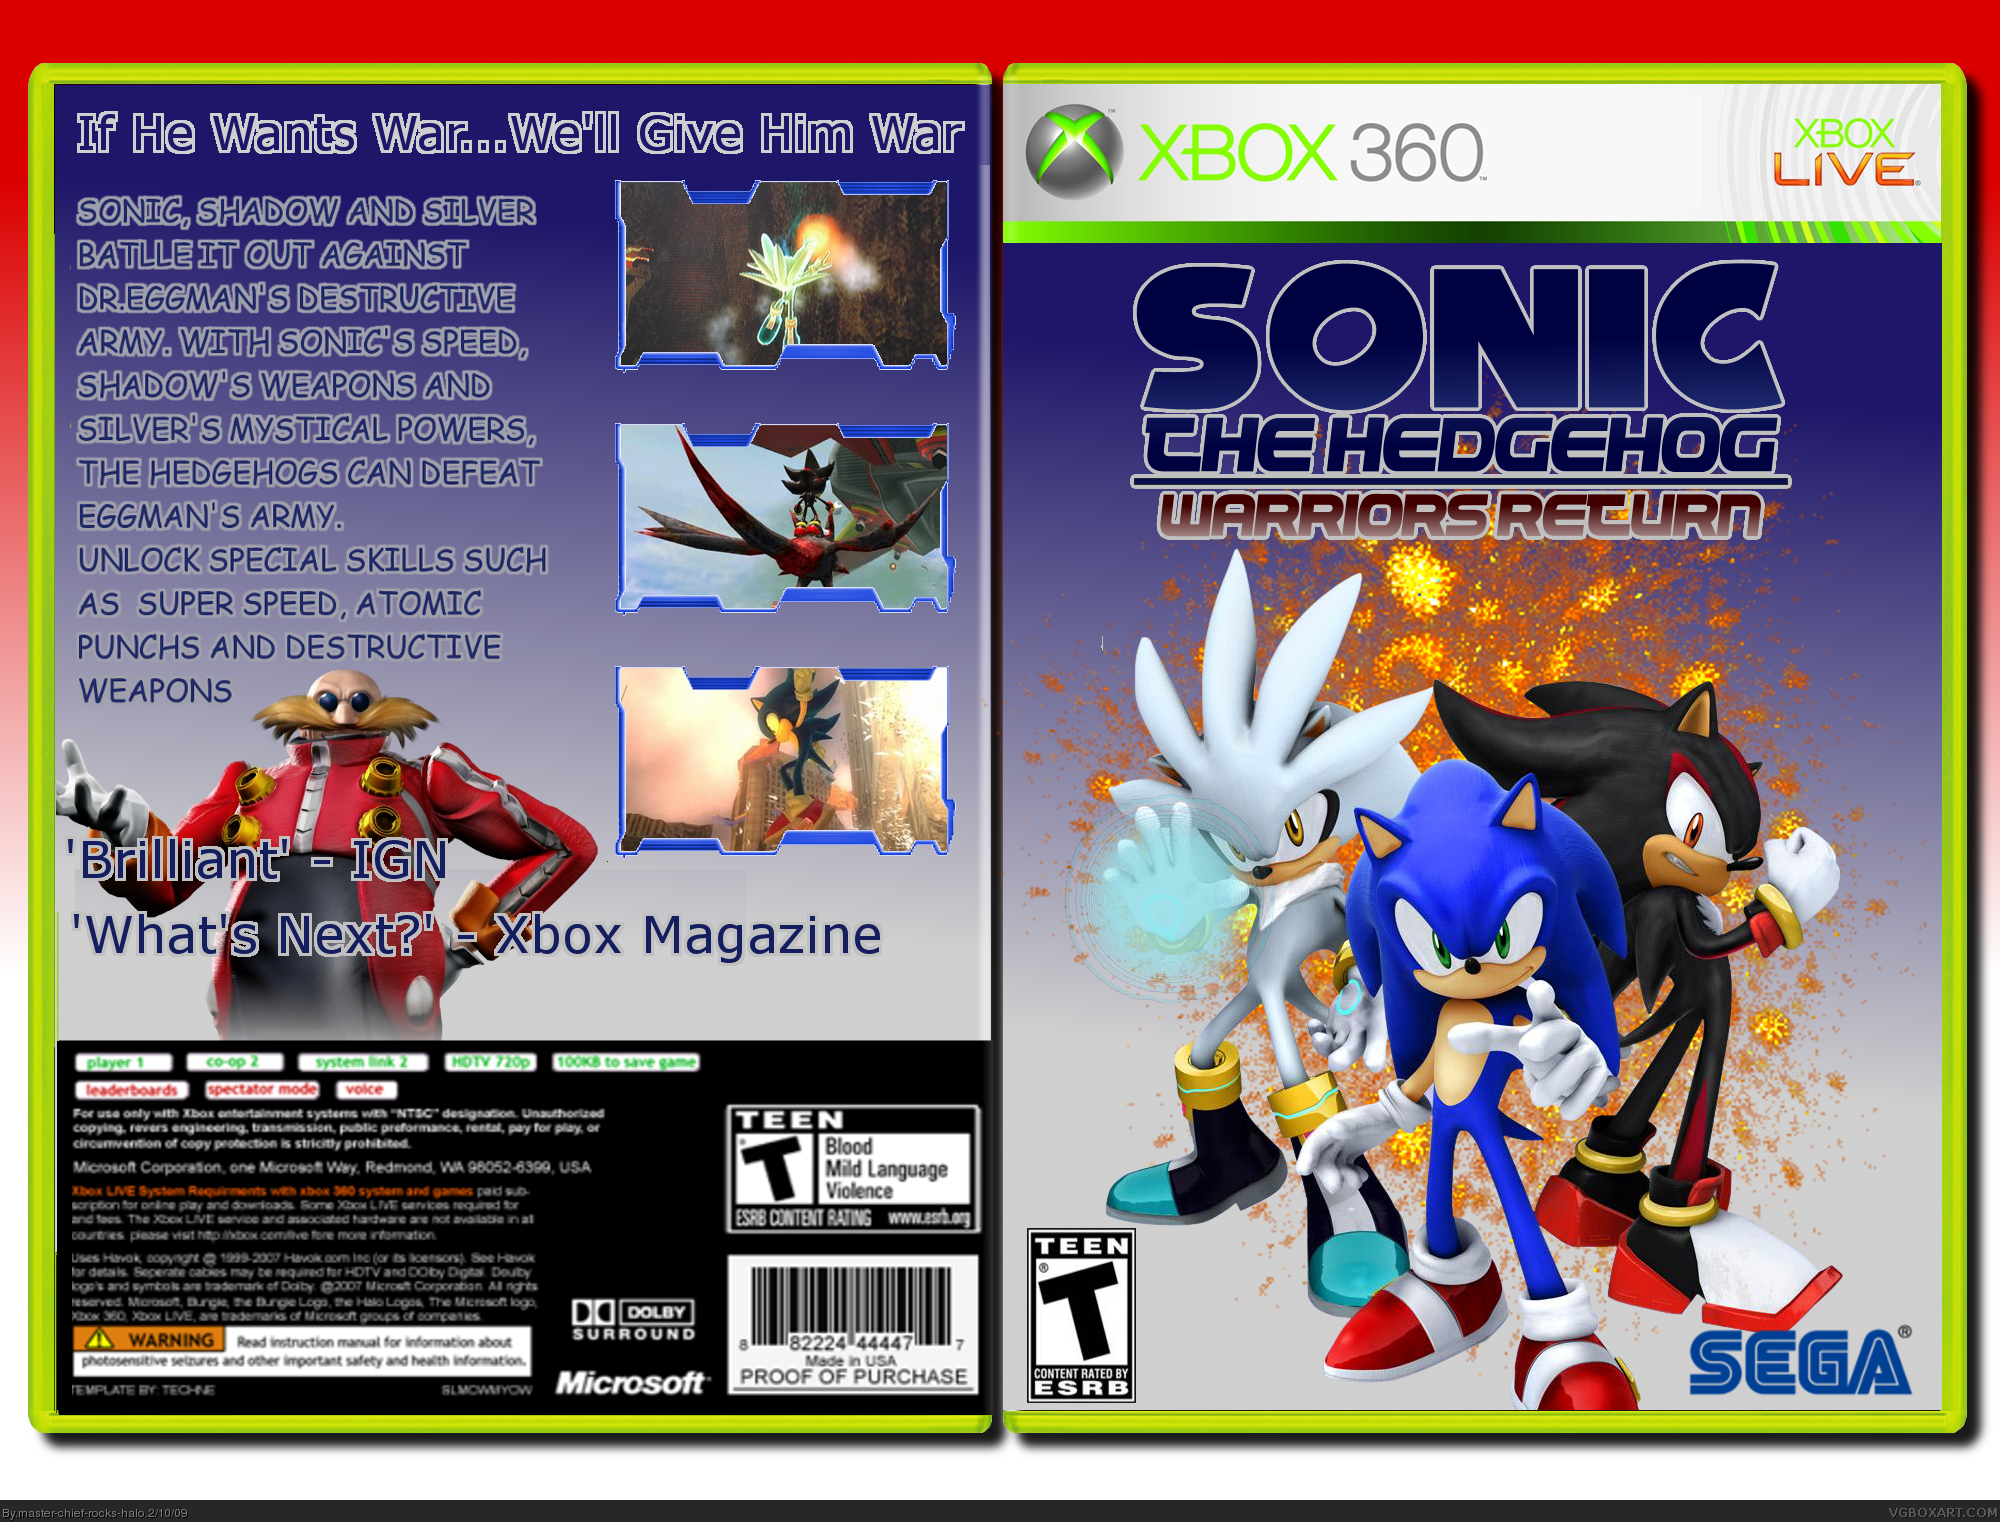 Sonic The Hedgehog: Warriors Return box cover